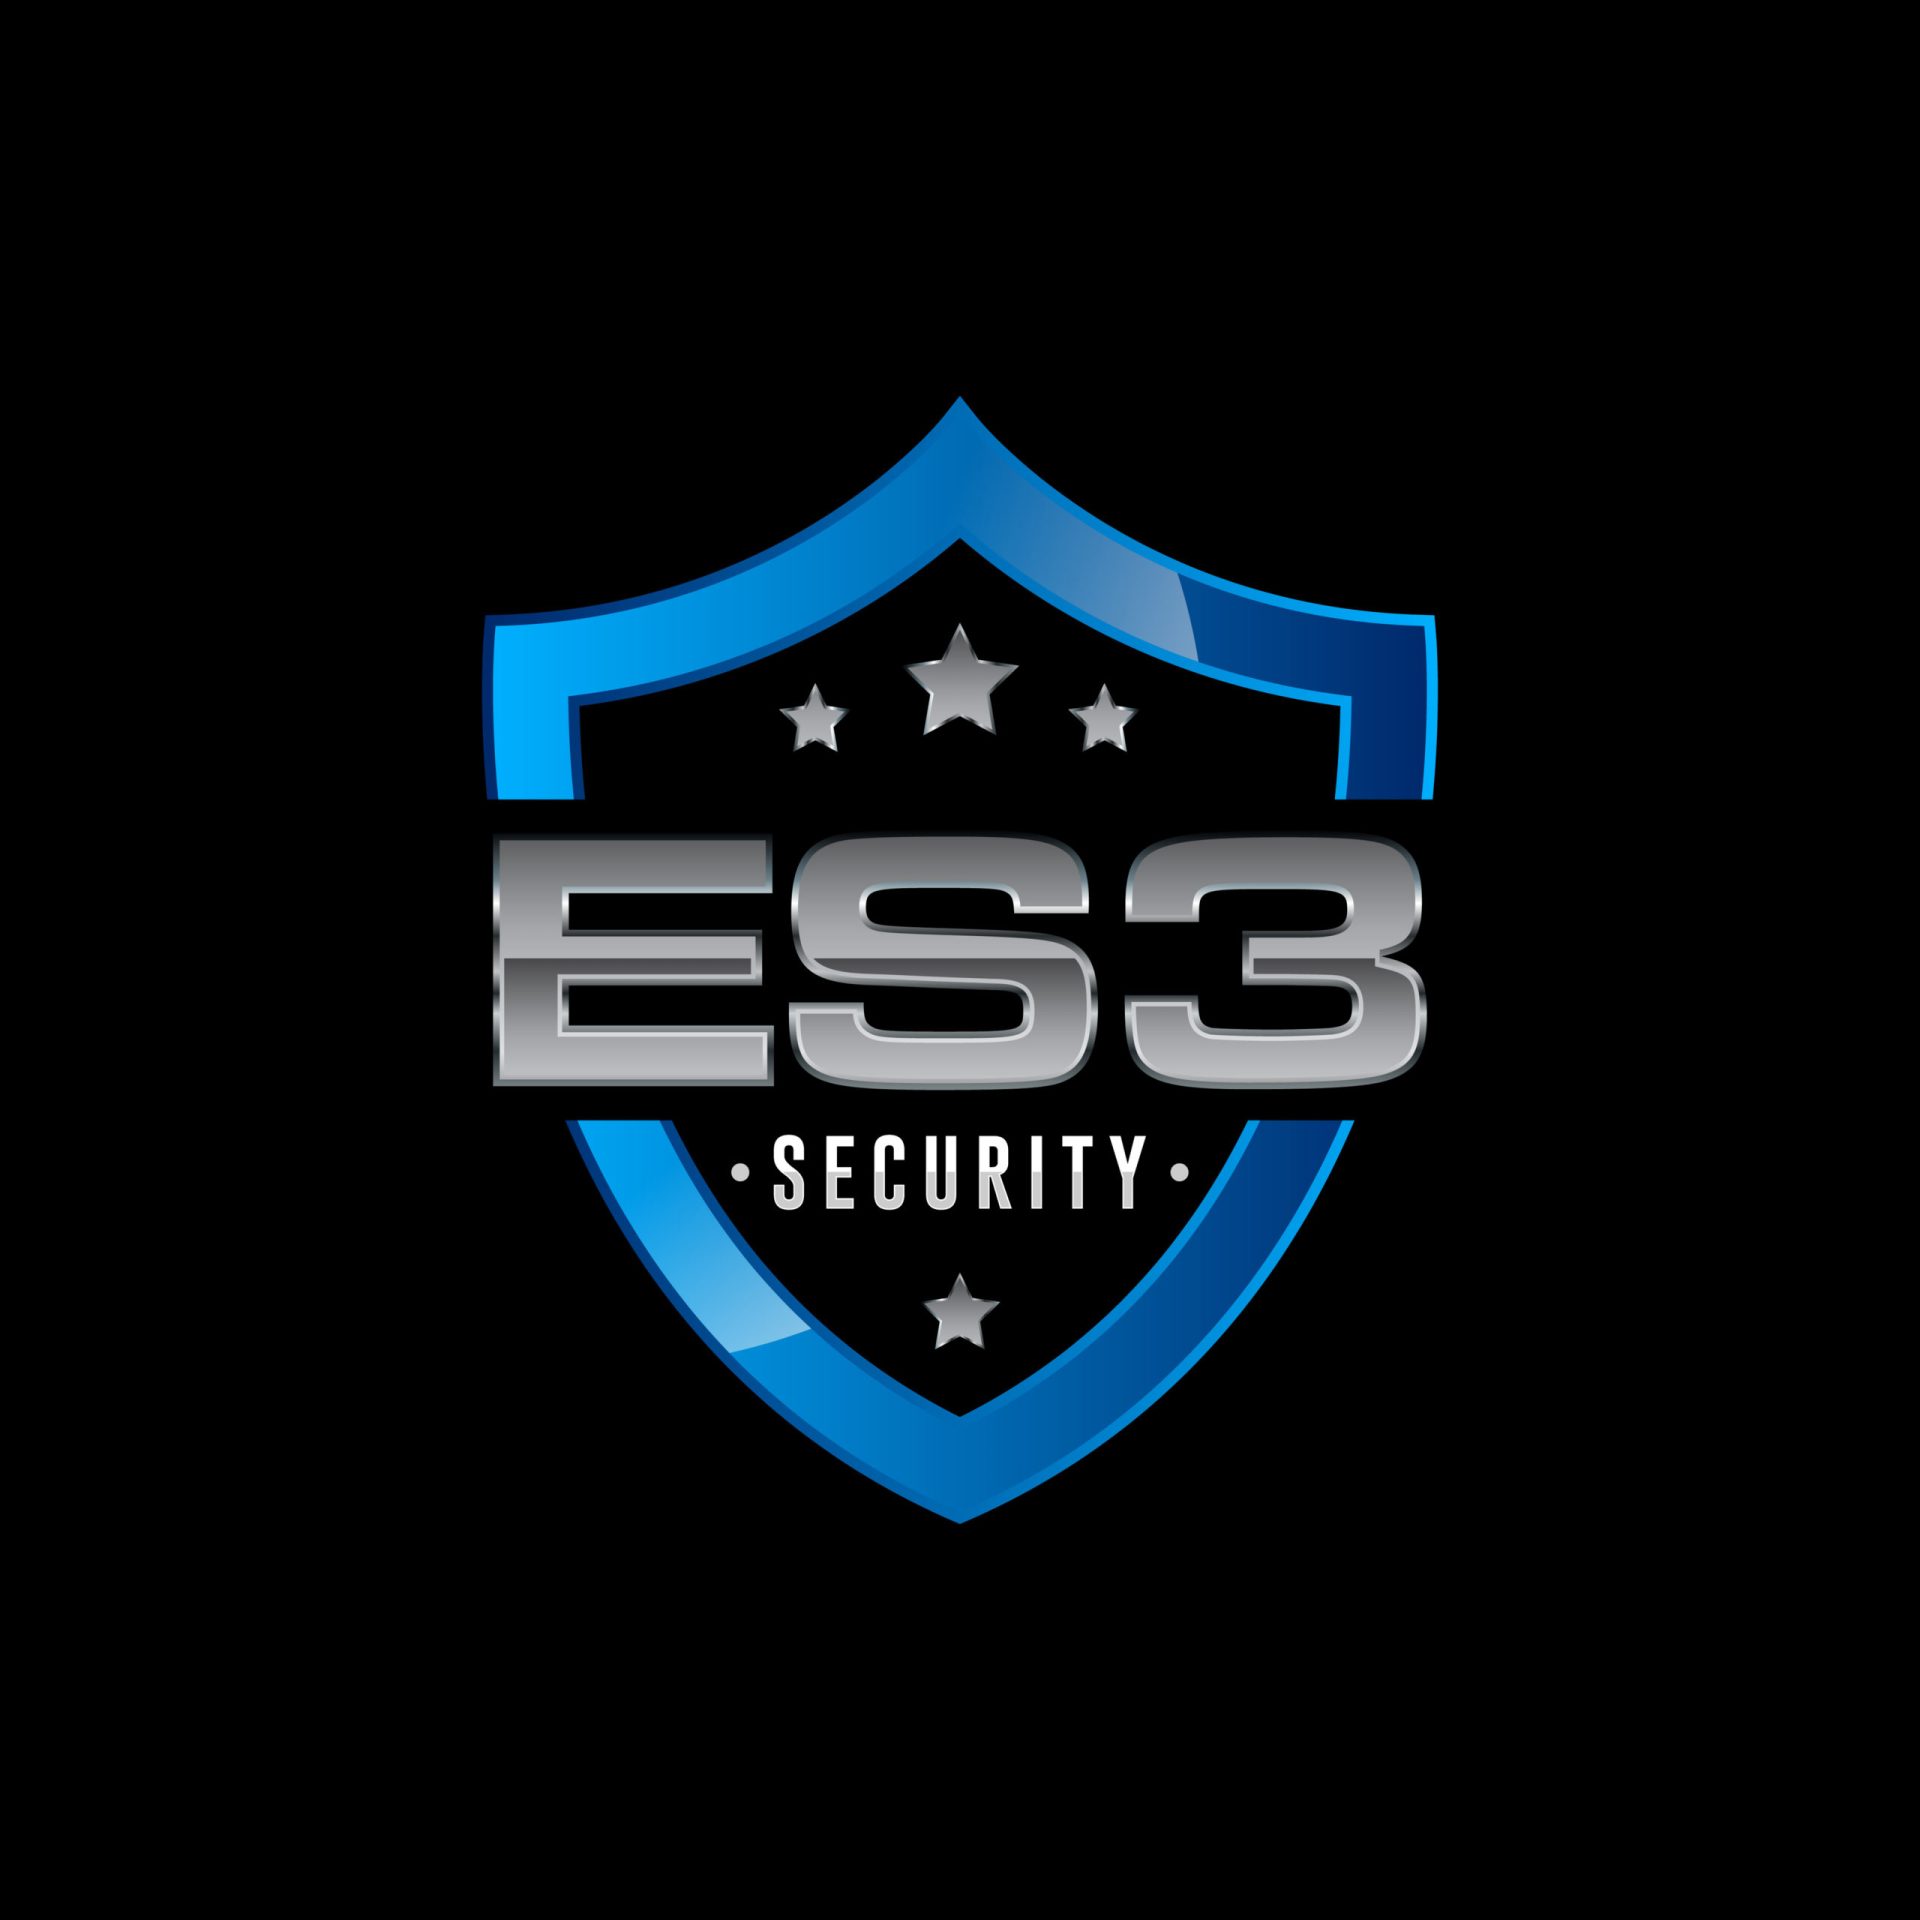 security logo ideas 3